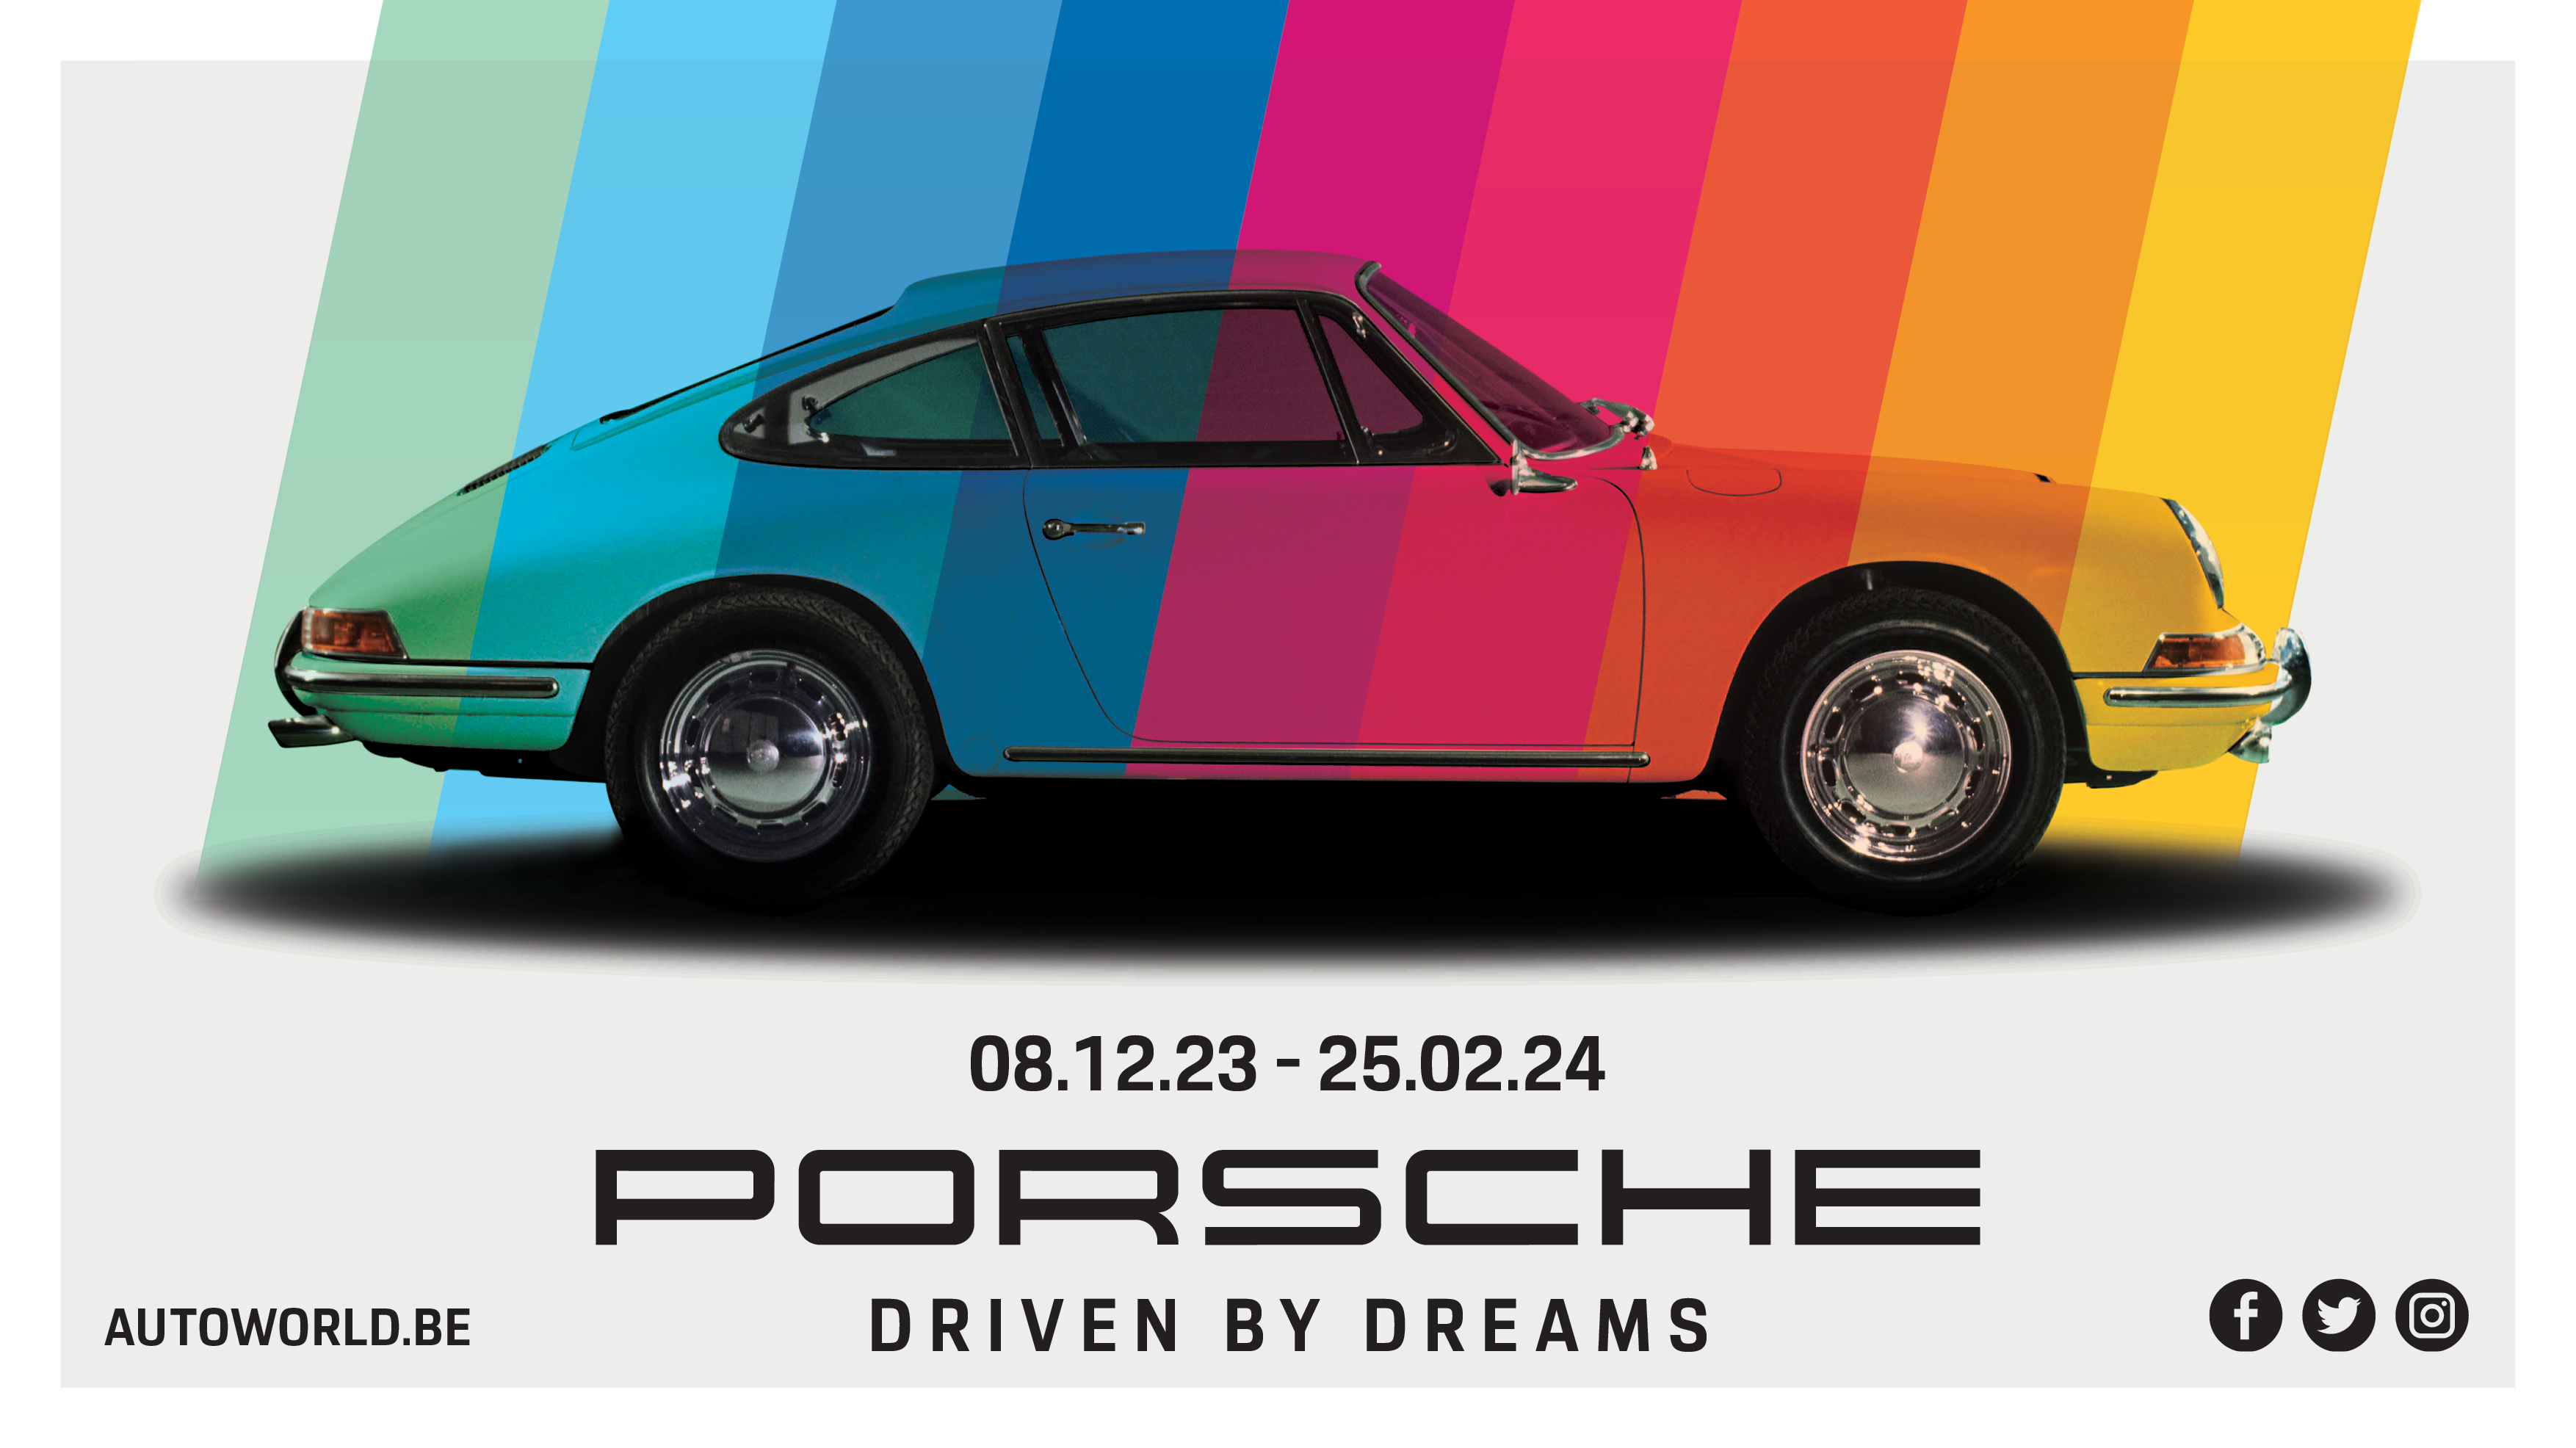 Dreaming of a Porsche Poster